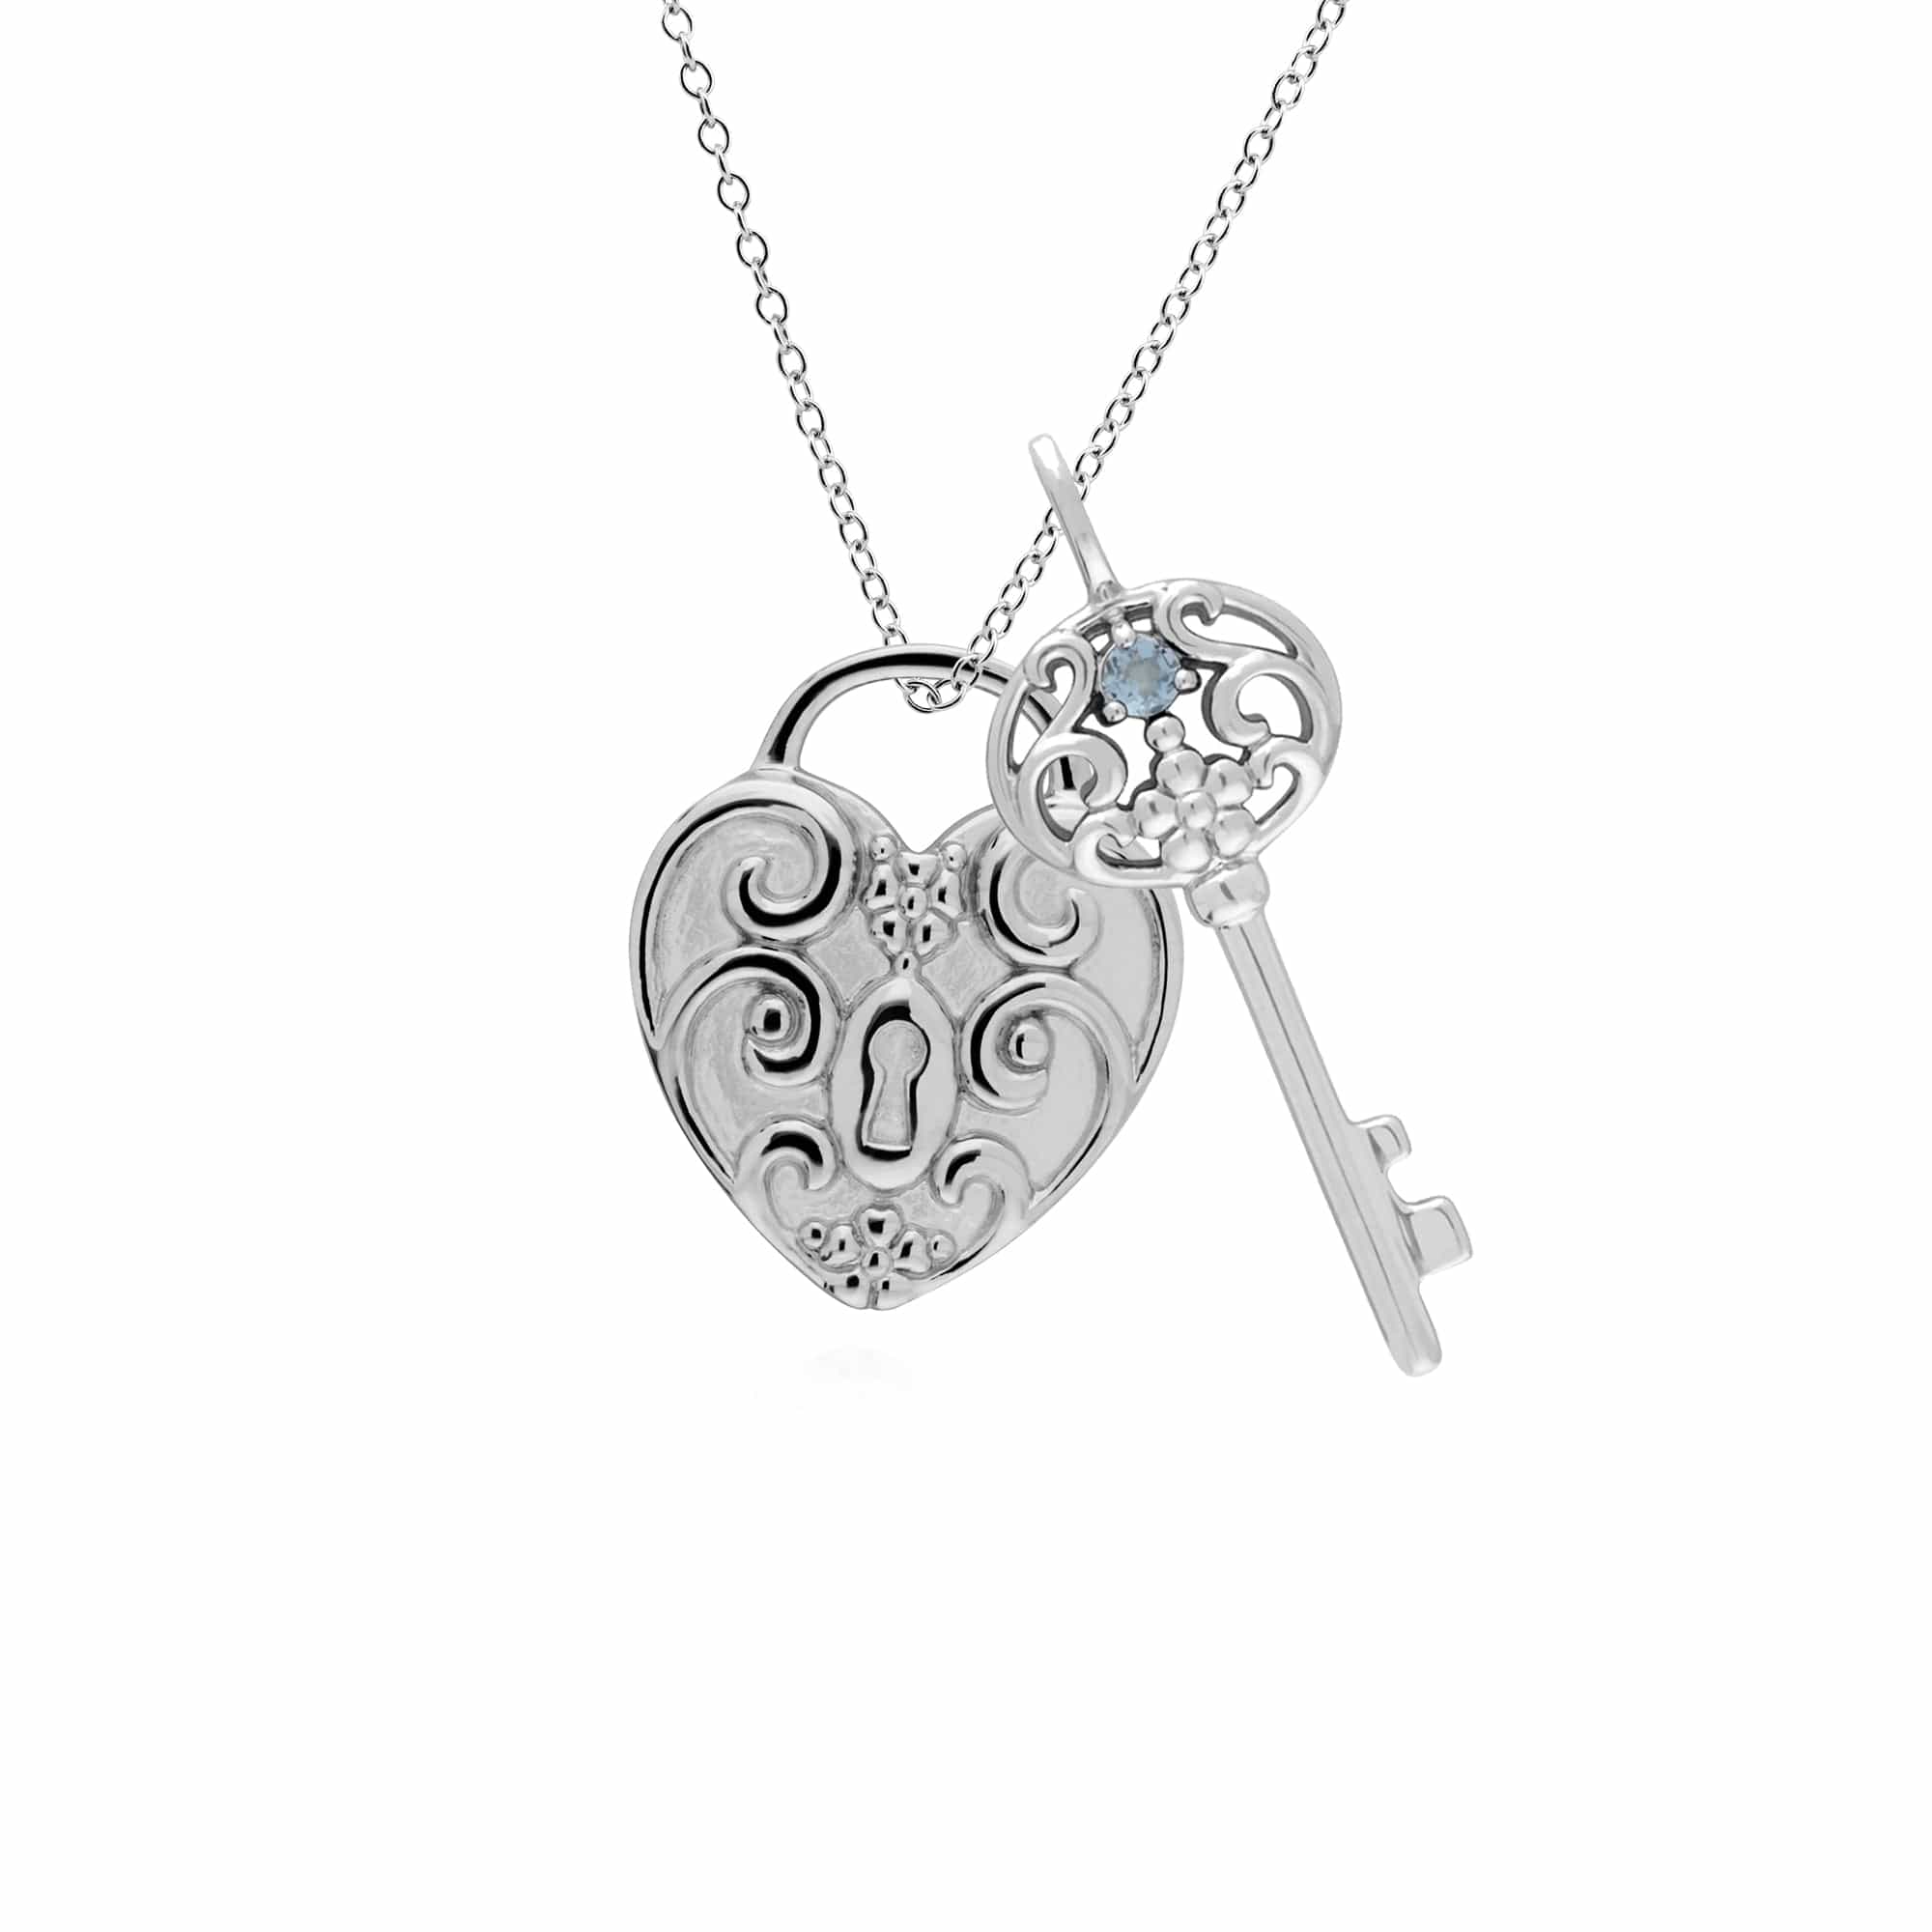 270P026813925-270P026601925 Classic Swirl Heart Lock Pendant & Aquamarine Big Key Charm in 925 Sterling Silver 1